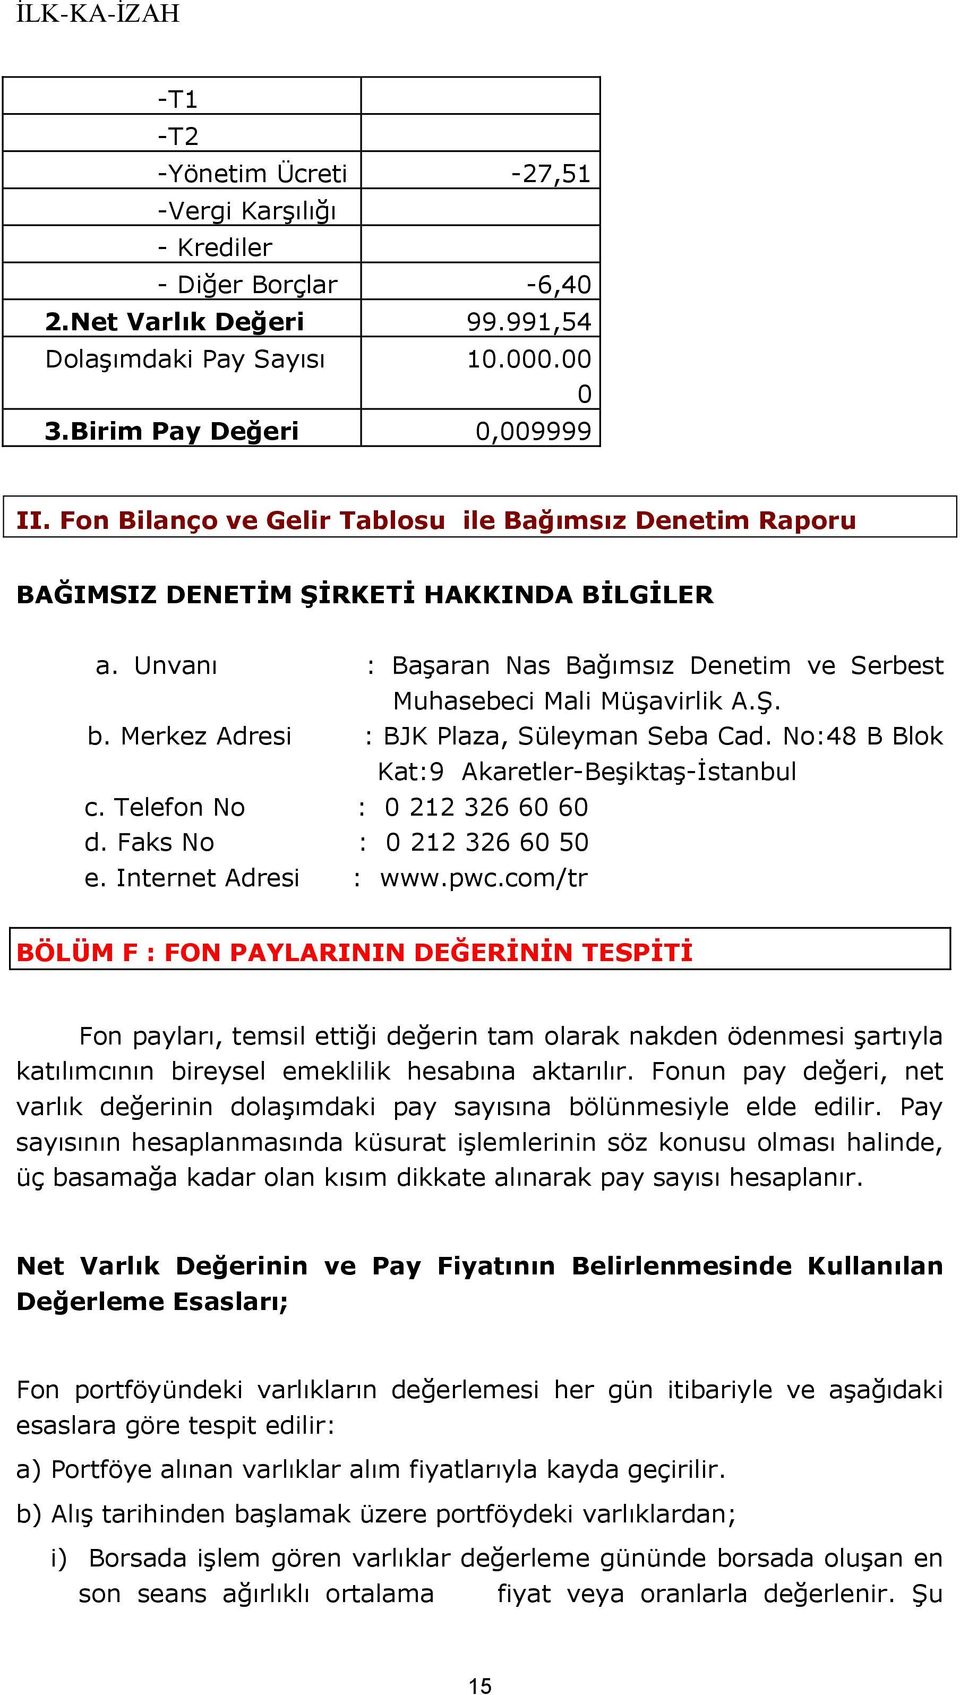 Merkez Adresi : BJK Plaza, Süleyman Seba Cad. No:48 B Blok Kat:9 Akaretler-Beşiktaş-İstanbul c. Telefon No : 0 212 326 60 60 d. Faks No : 0 212 326 60 50 e. Internet Adresi : www.pwc.